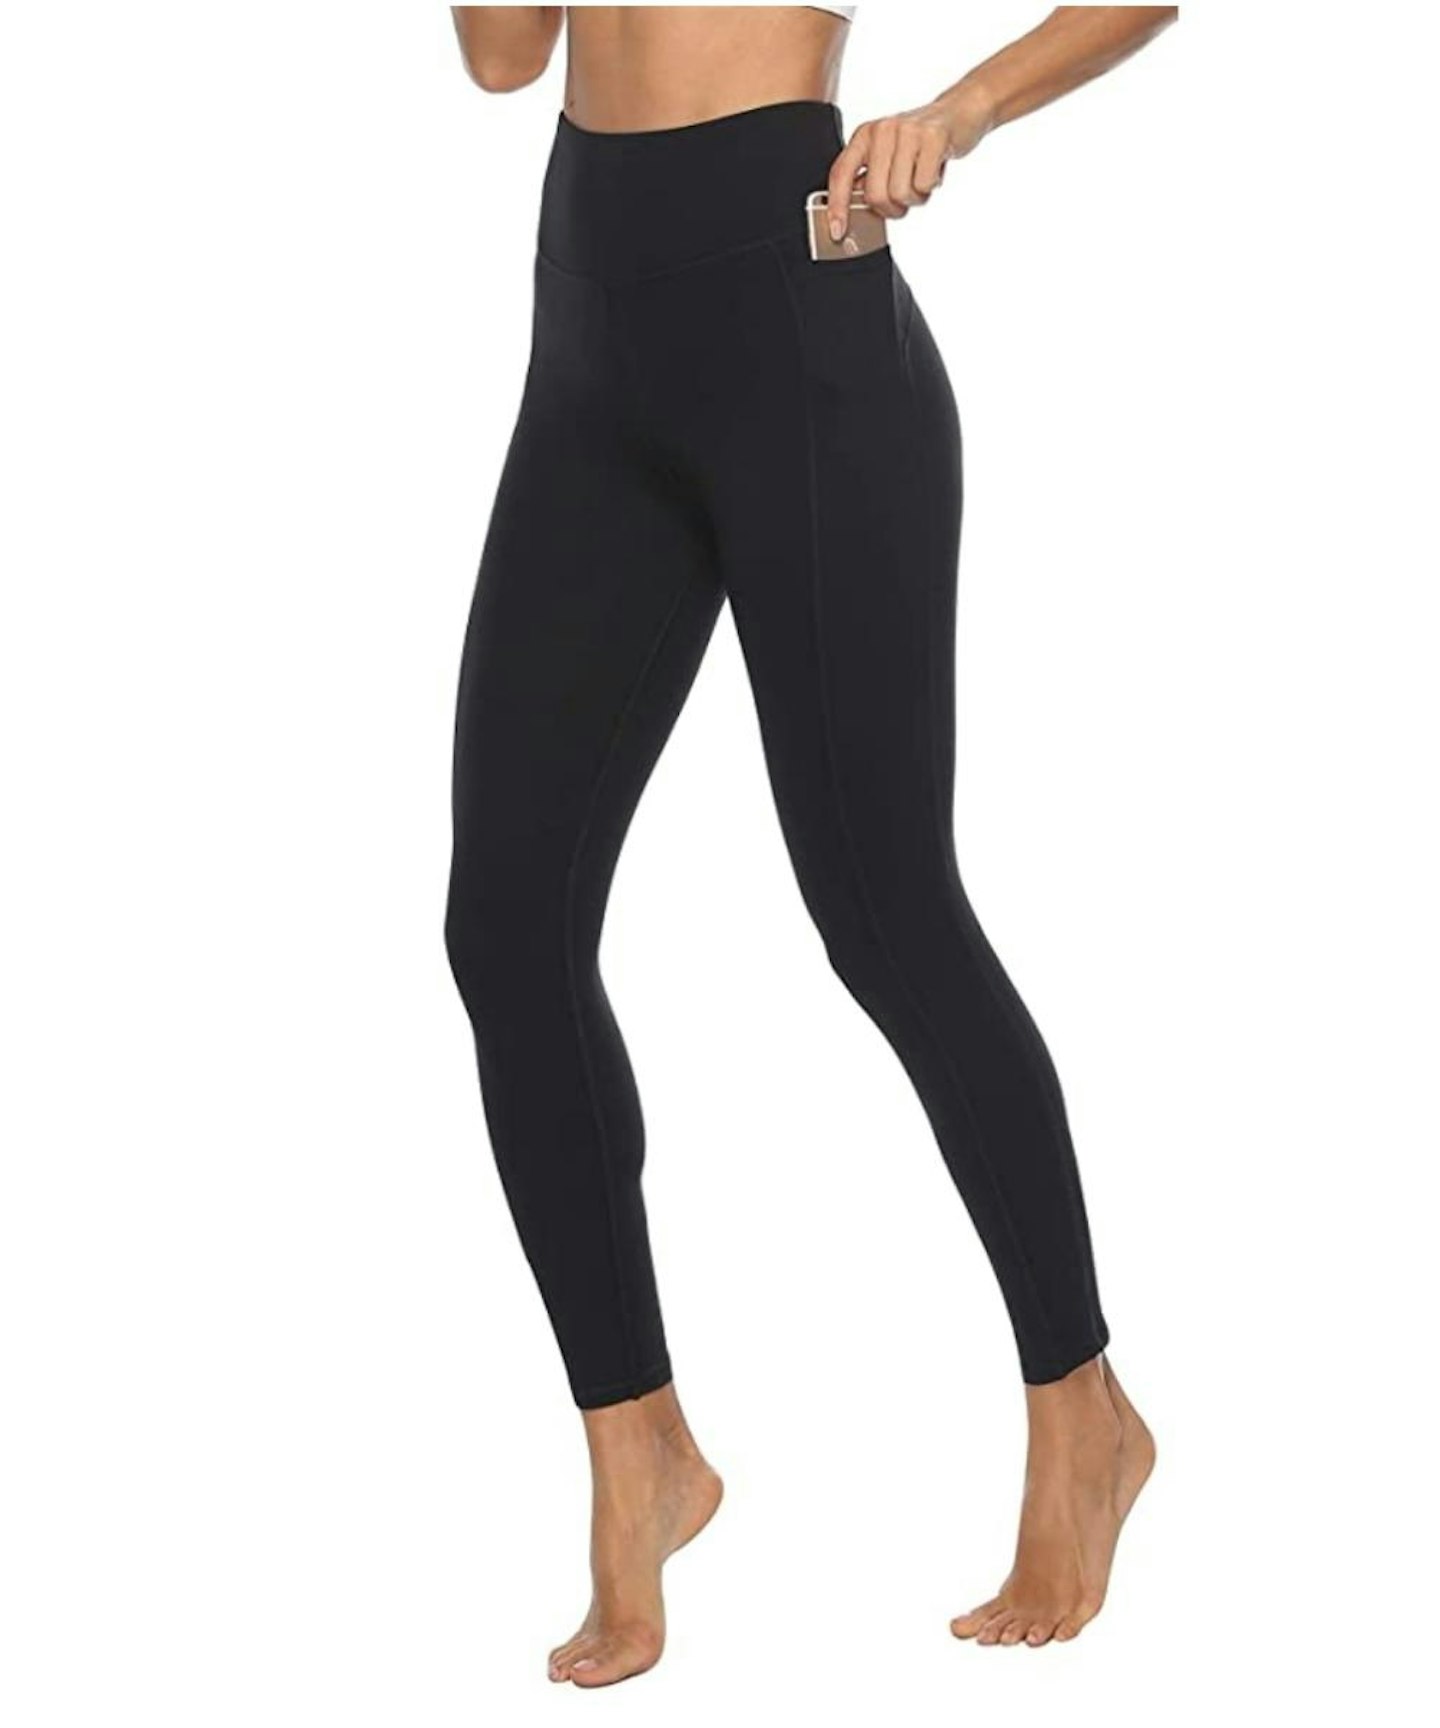 https://images.bauerhosting.com/celebrity/sites/2/2022/07/shapewear-leggings-2022-where-to-buy-JOYSPELS-Womens-High-Waisted-Gym-Leggings-Tummy-Control-Yoga-Pants.jpg?auto=format&w=1440&q=80